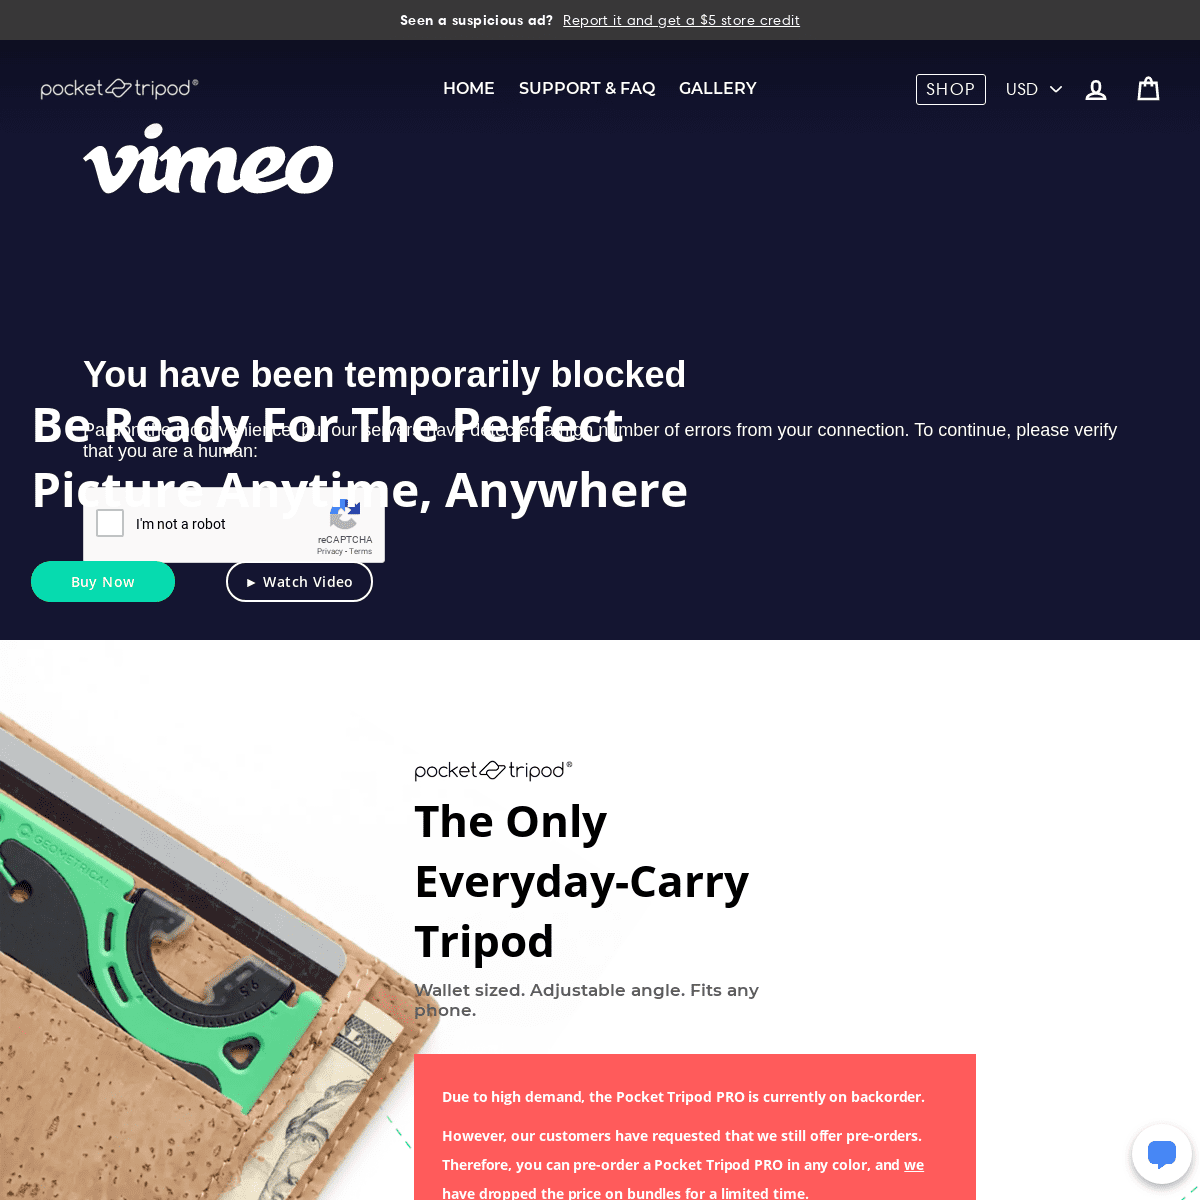 A complete backup of pocket-tripod.com